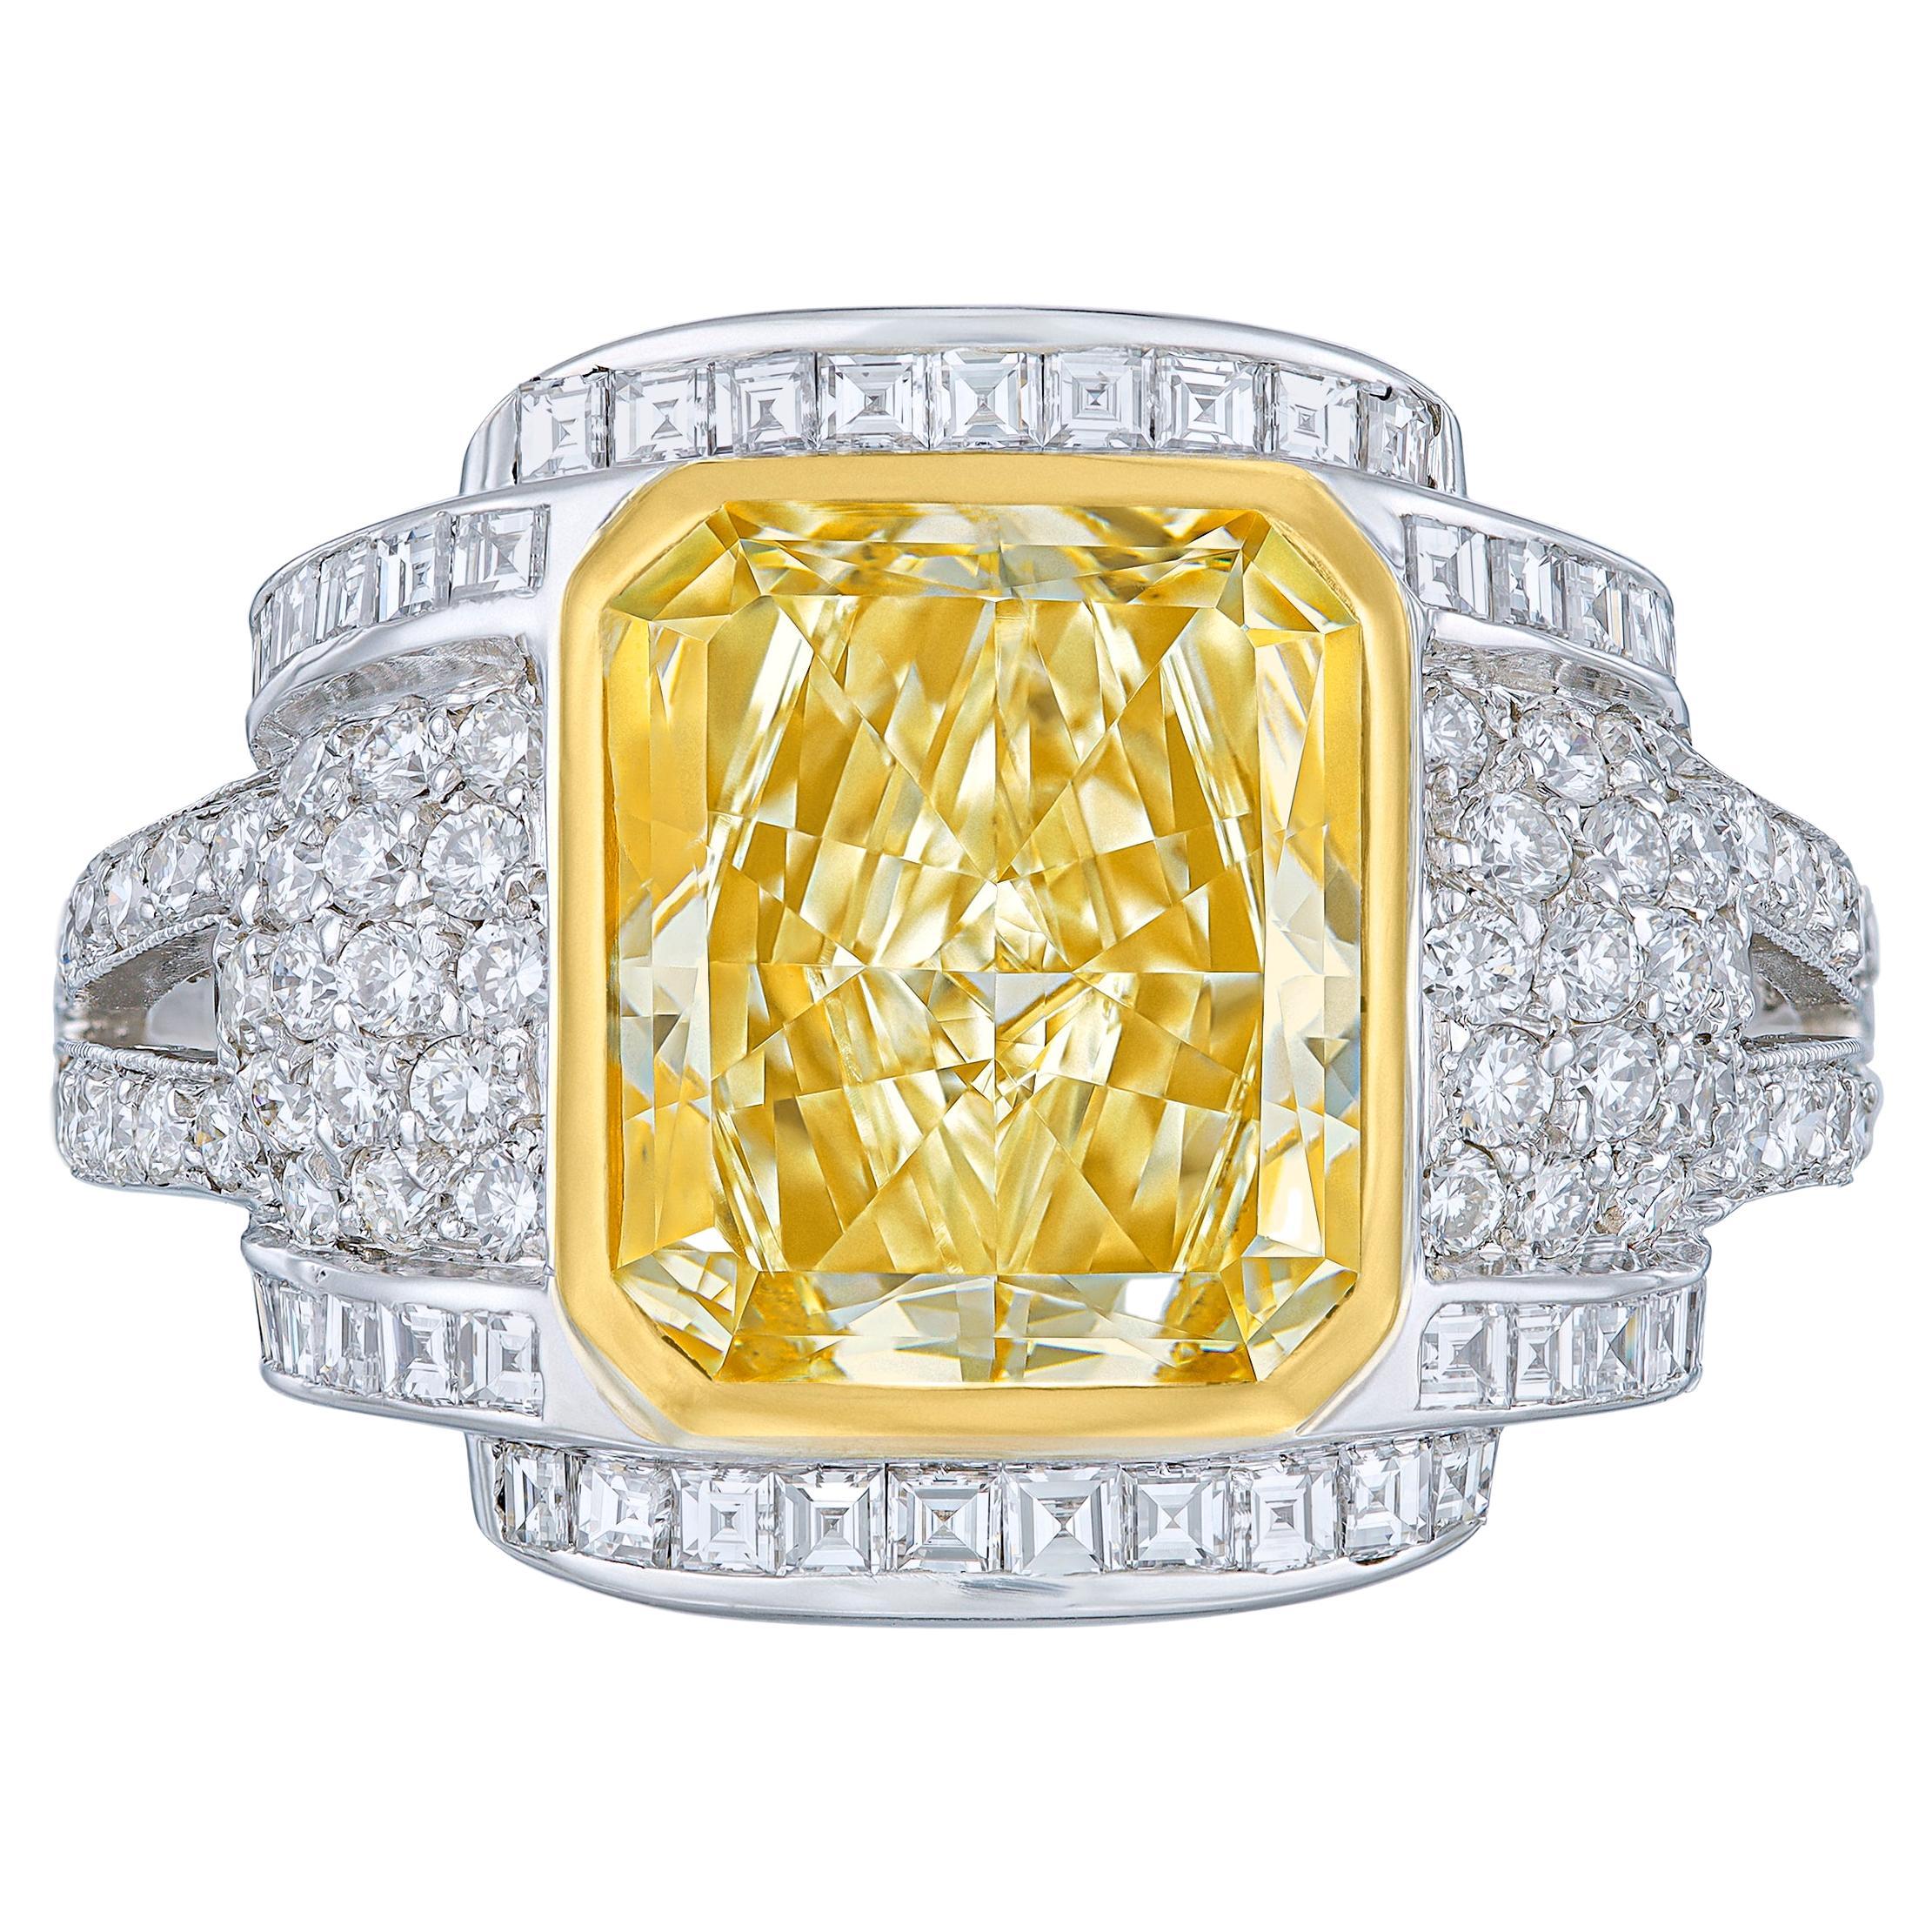 Fancy Yellow 3.87 Carat Certified Diamond Cocktail Ring in Platinum